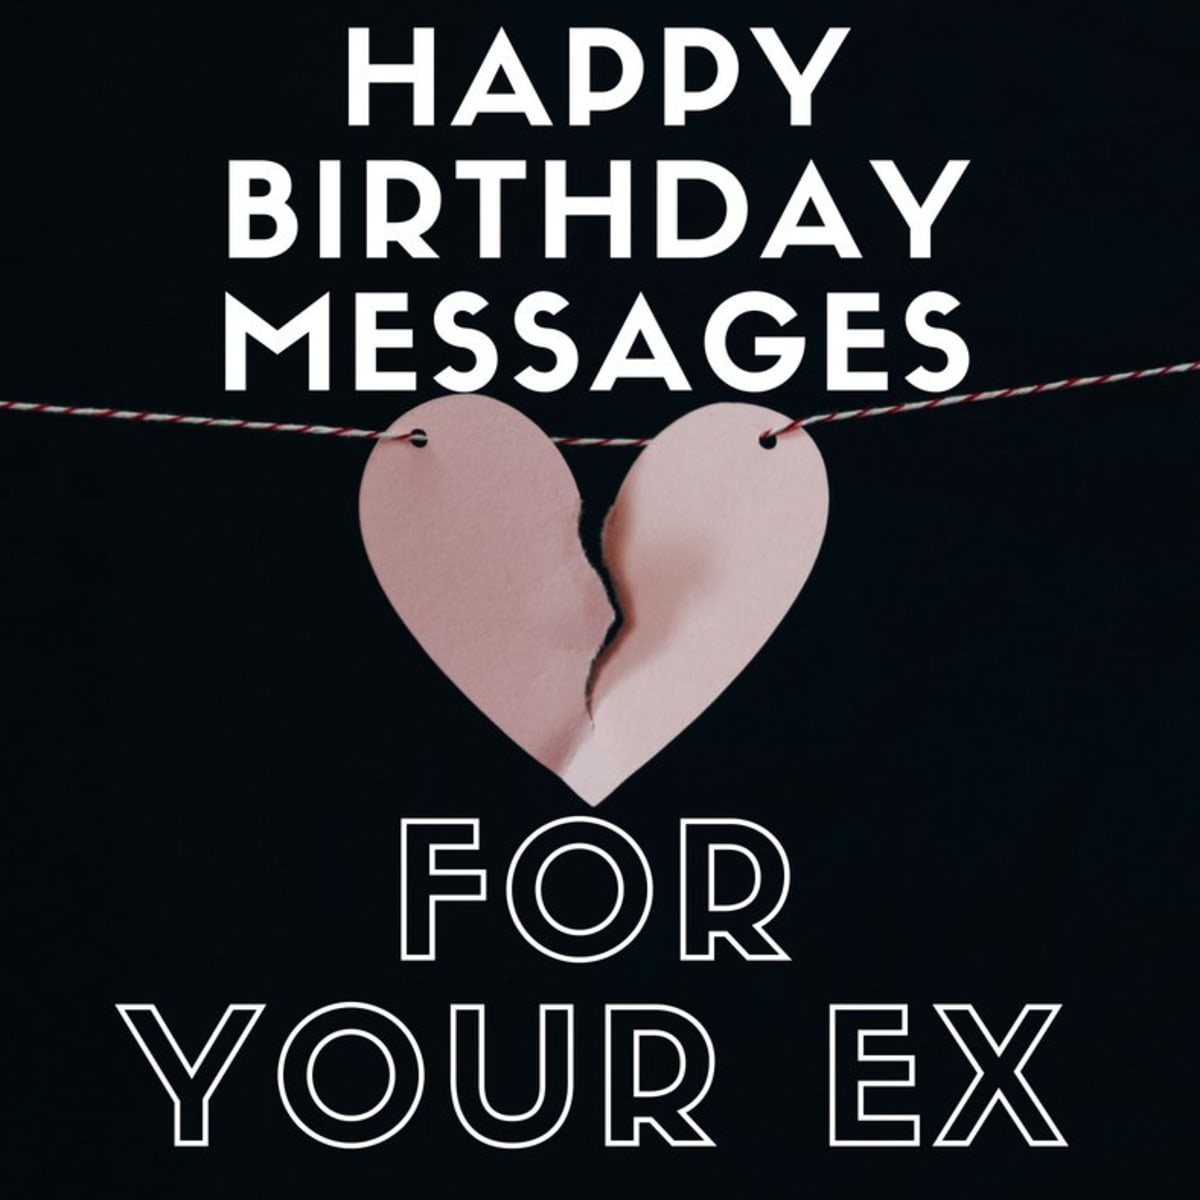 Happy Birthday Wishes For Your Ex Girlfriend Or Ex Boyfriend Holidappy